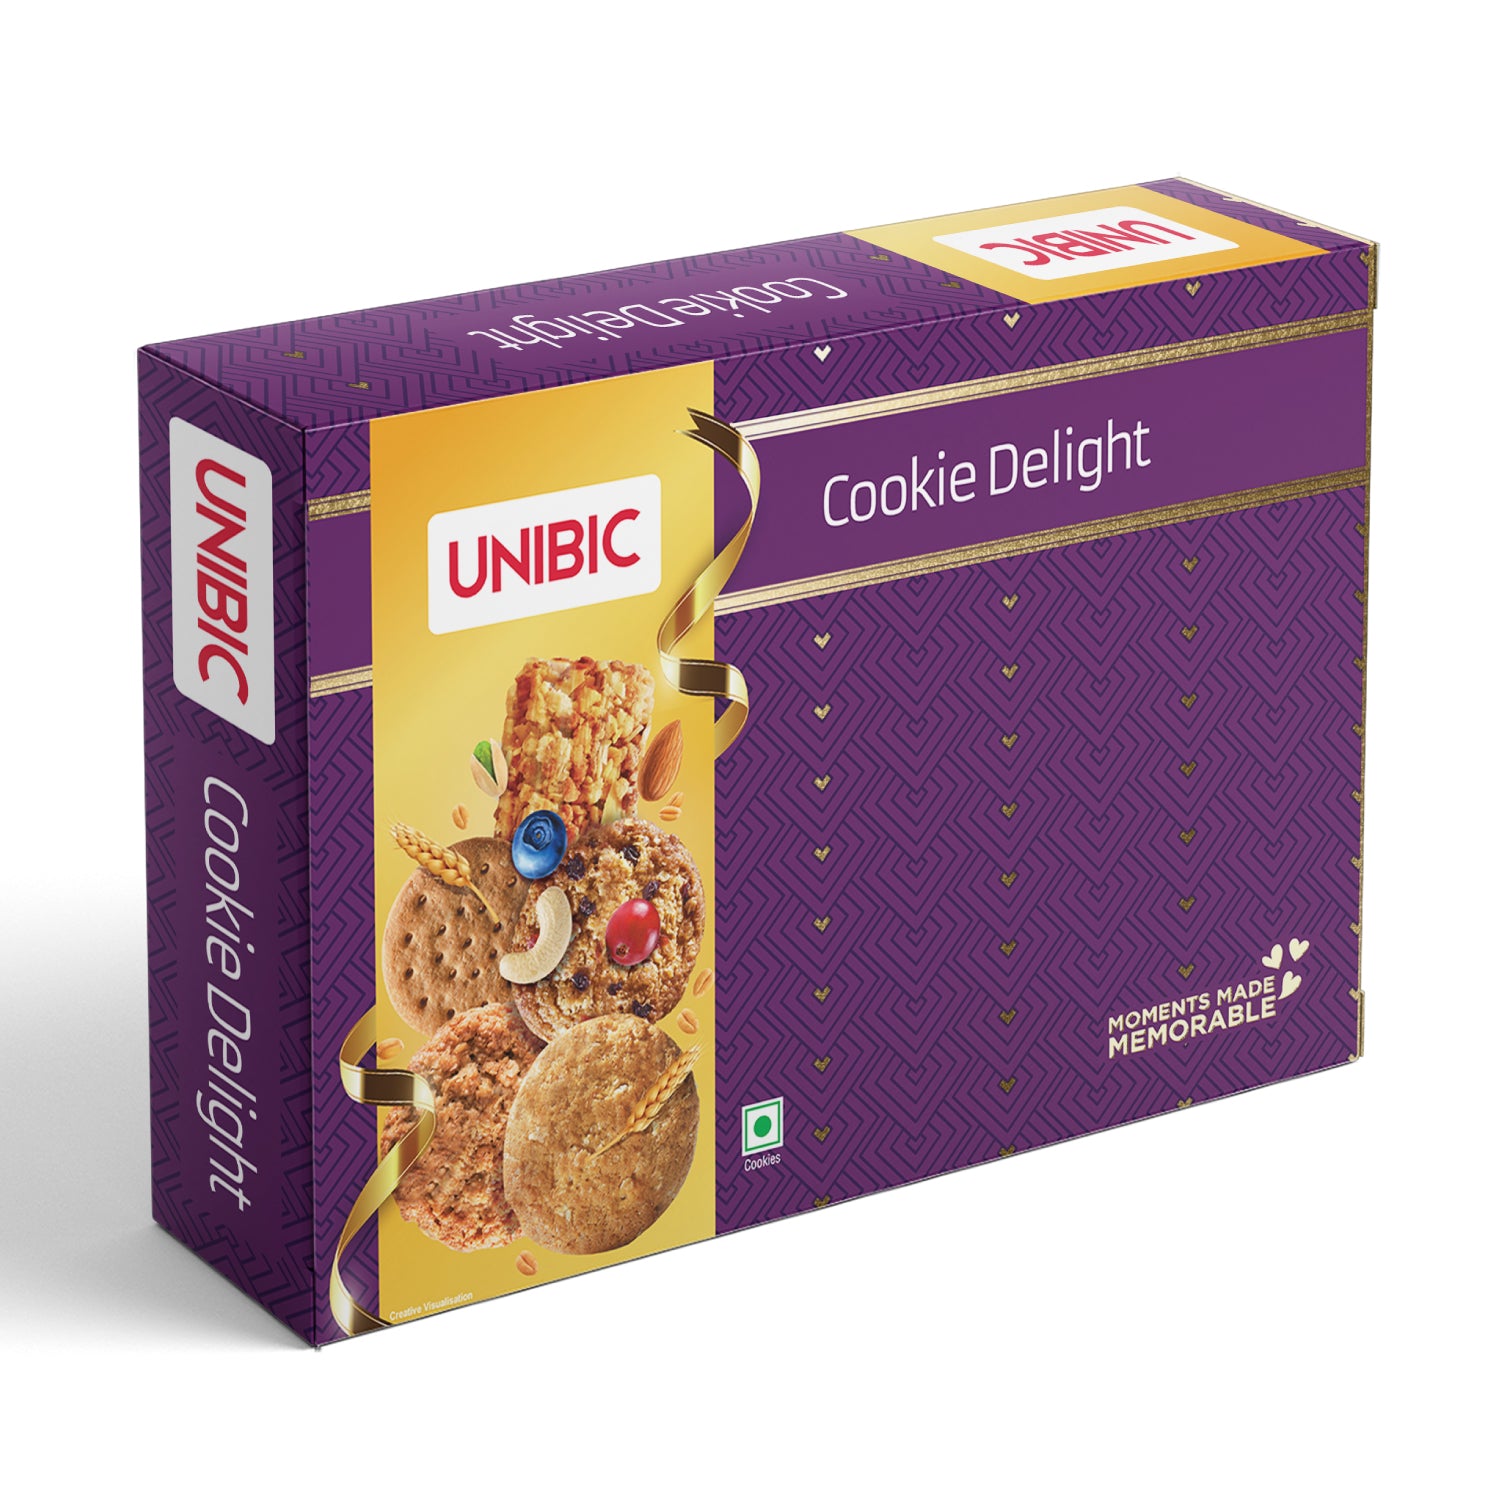 Unibic cookies - YouTube